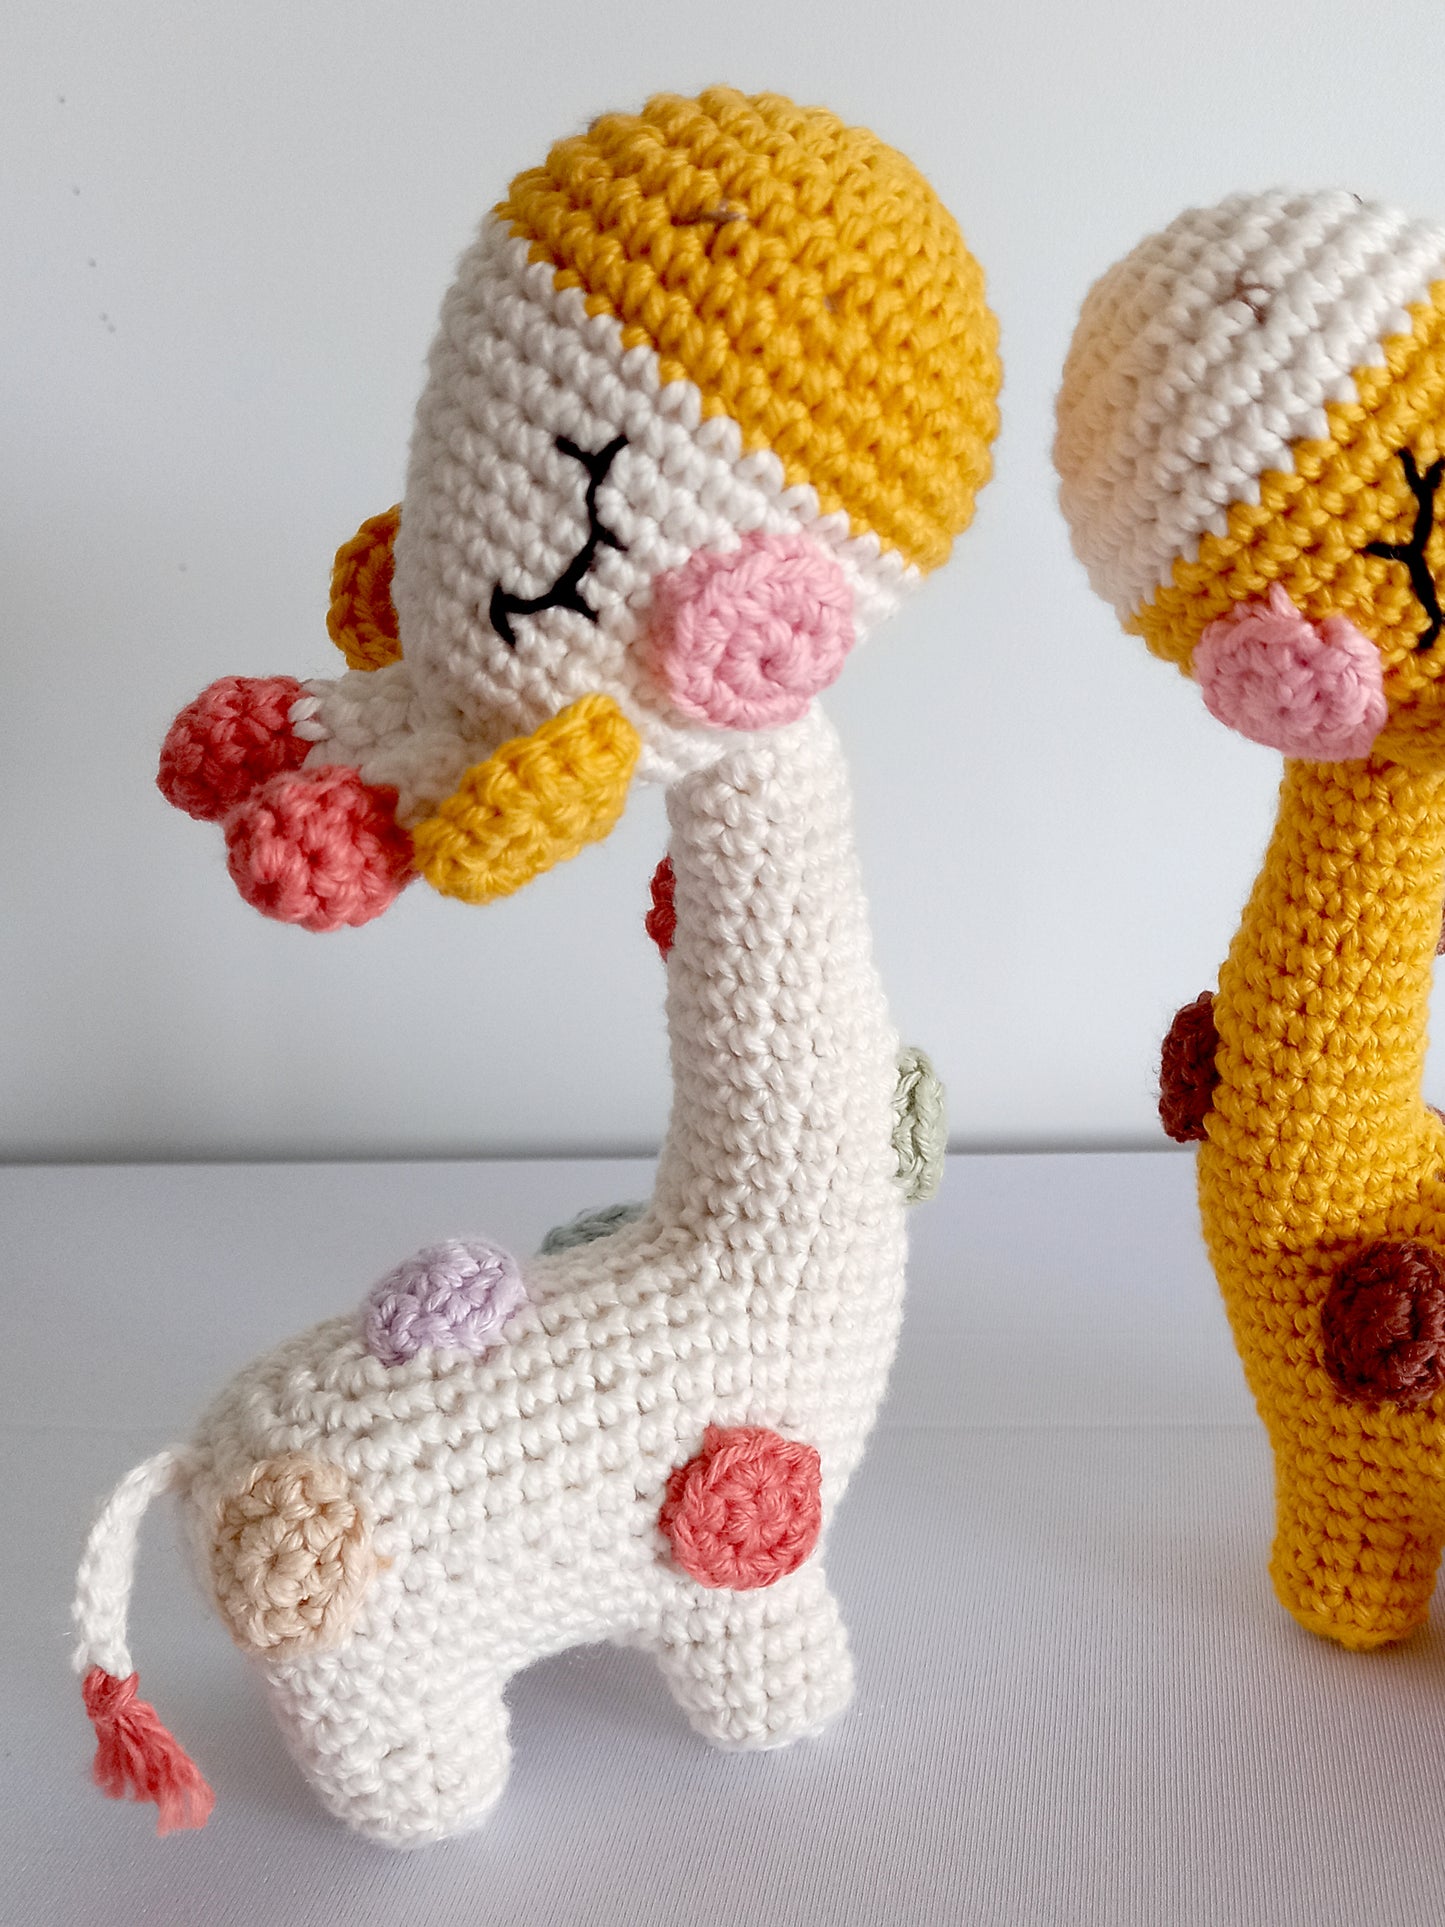 Crocheted Giraffes - Gable and Greta